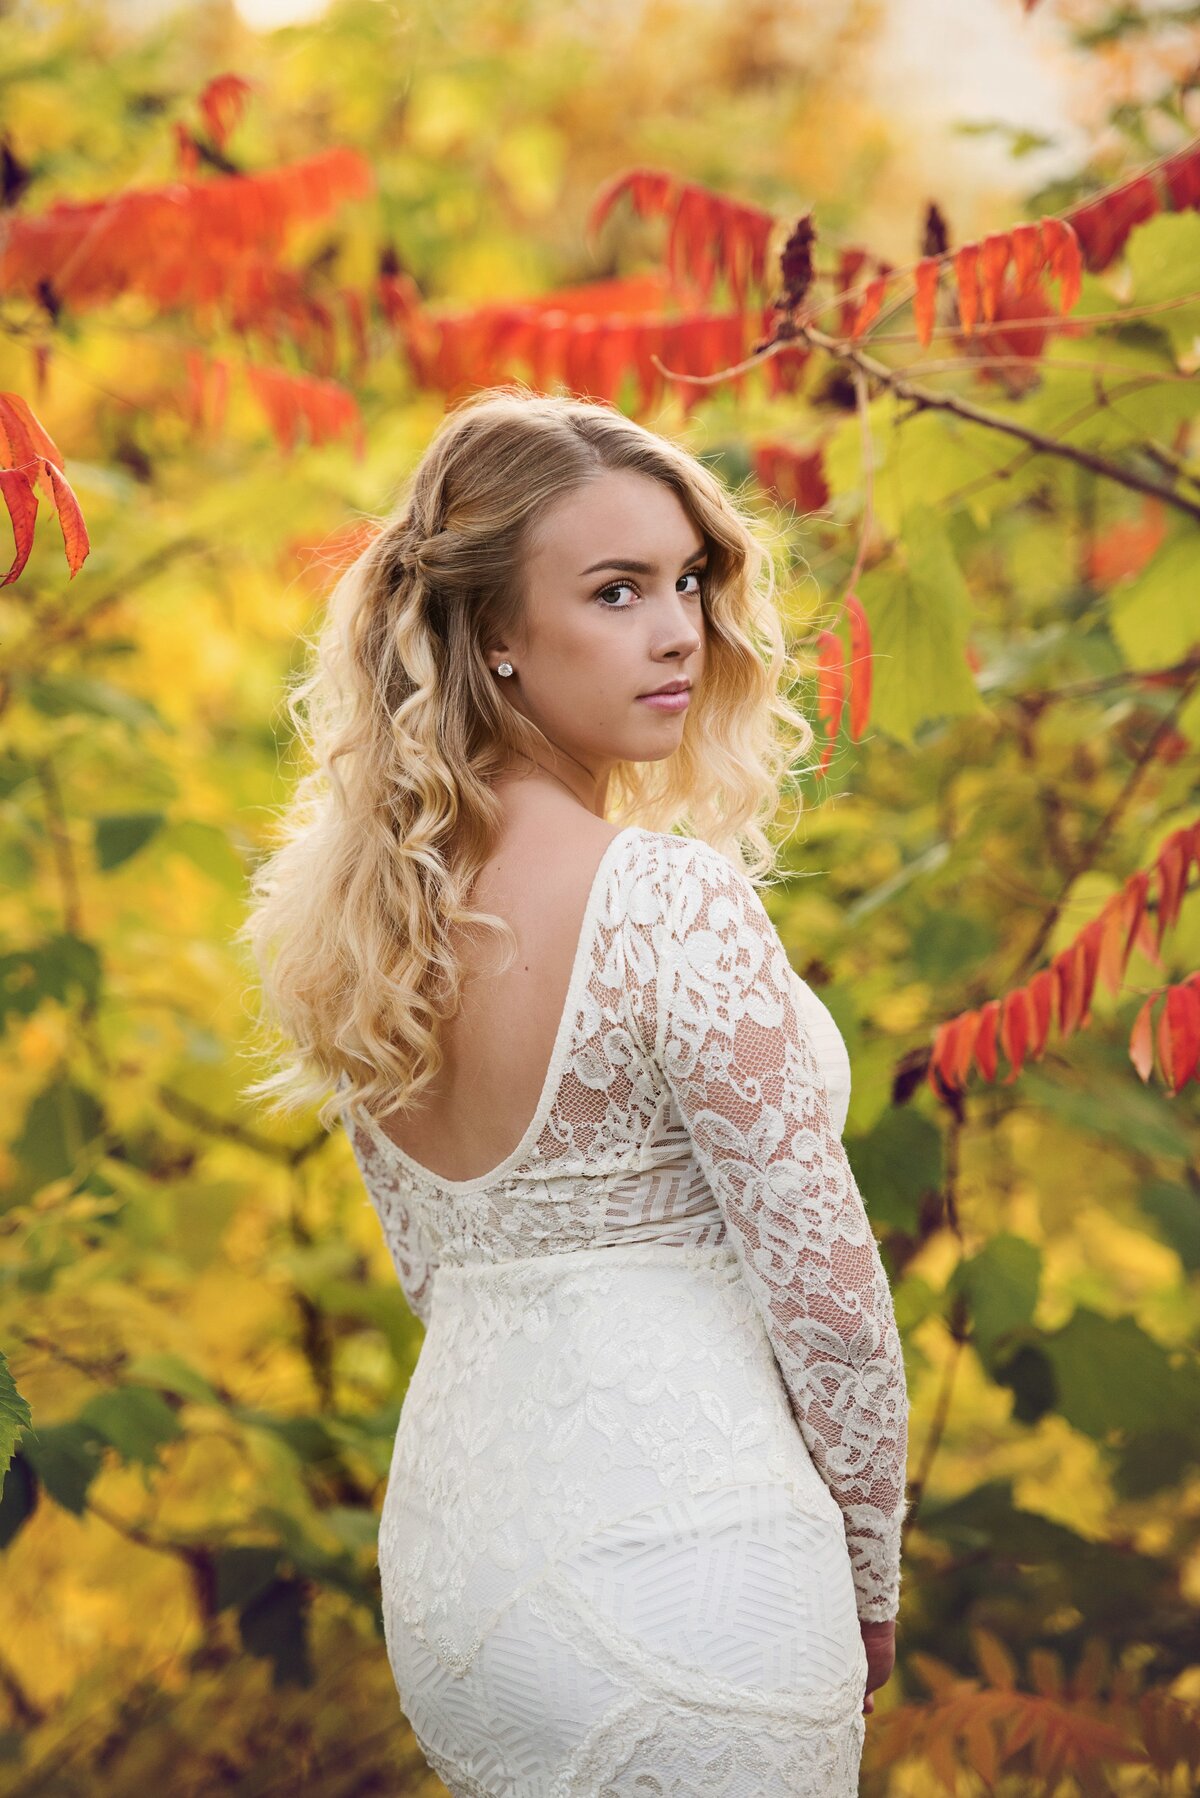 Mahtomedi high school senior photo of girl in white prom dress in fall leaves